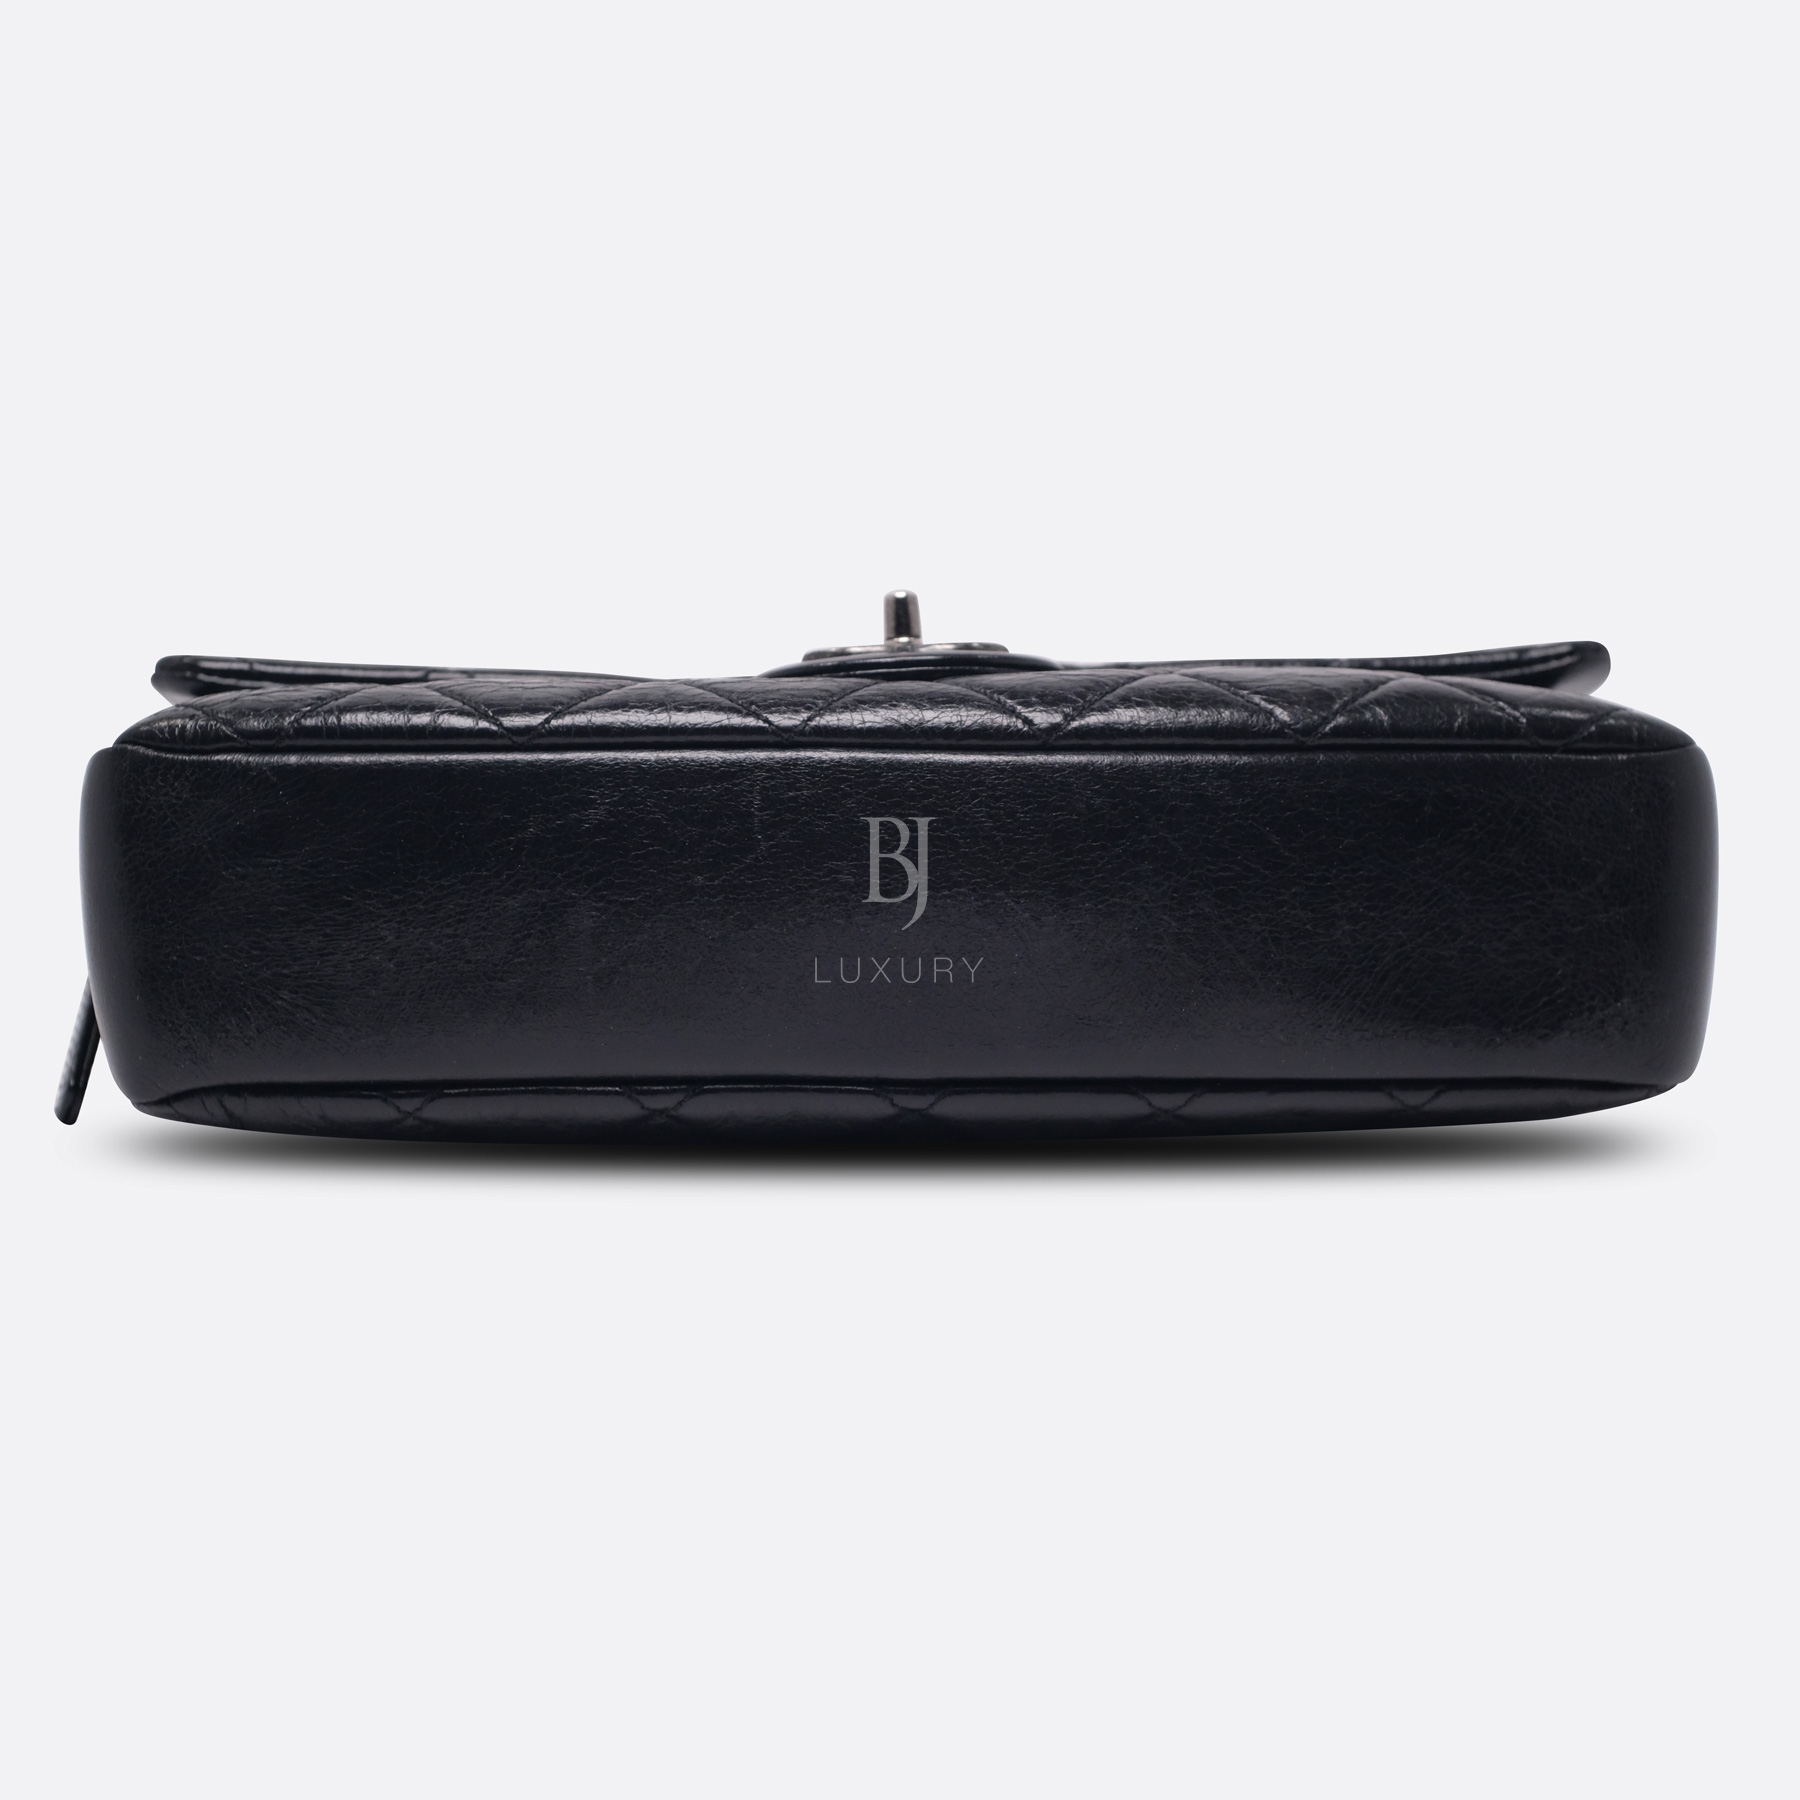 Chanel Flap Bag Aged Calfskin Ruthenium Medium Black BJ Luxury 8.jpg